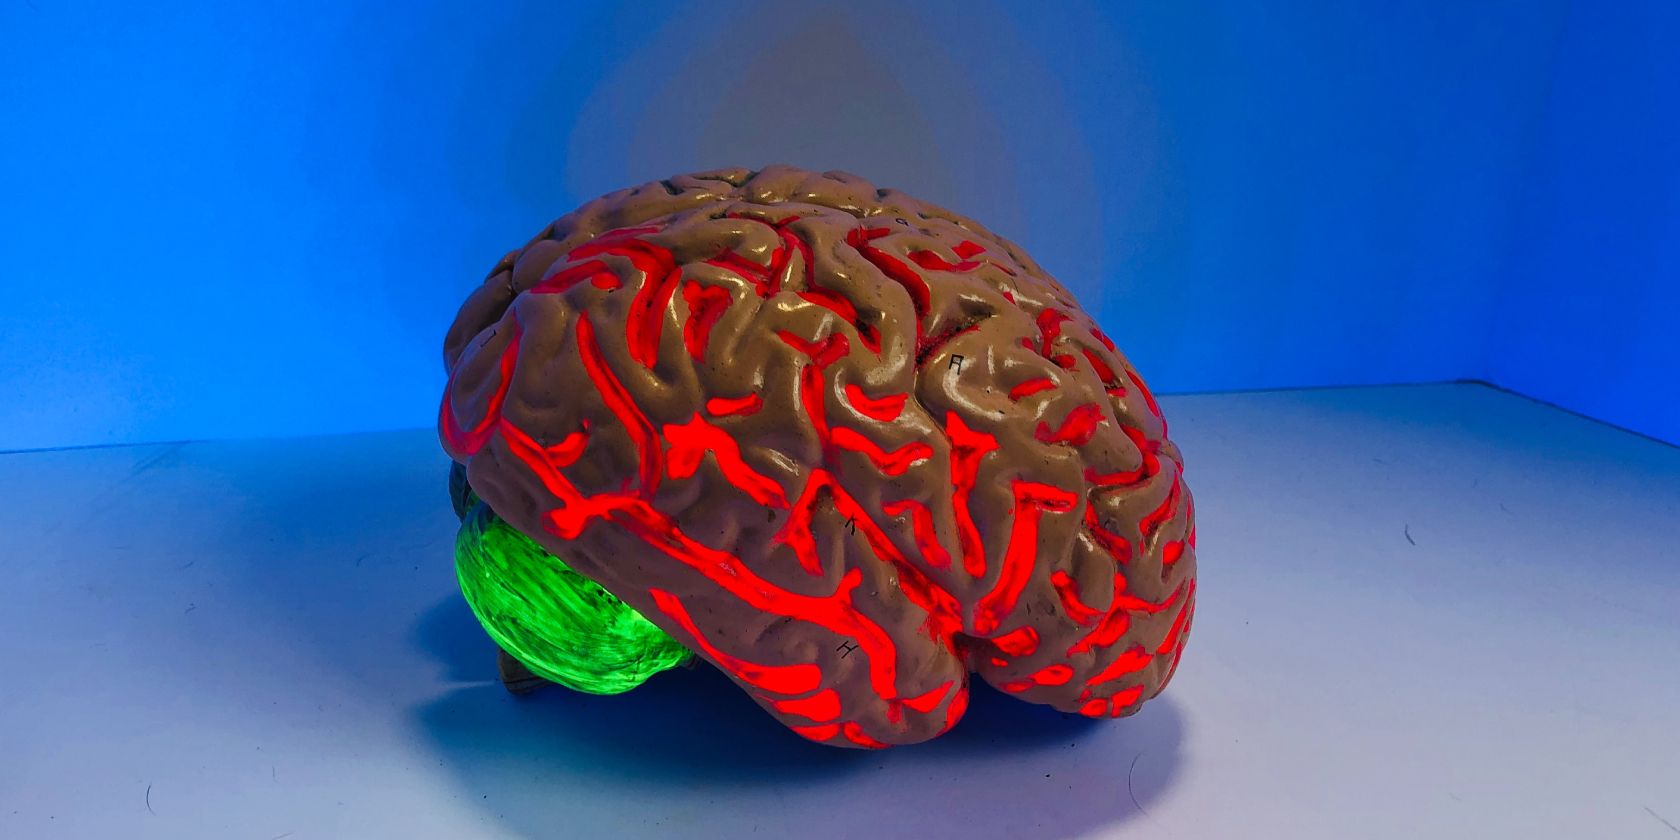 Colorful brain model on desk